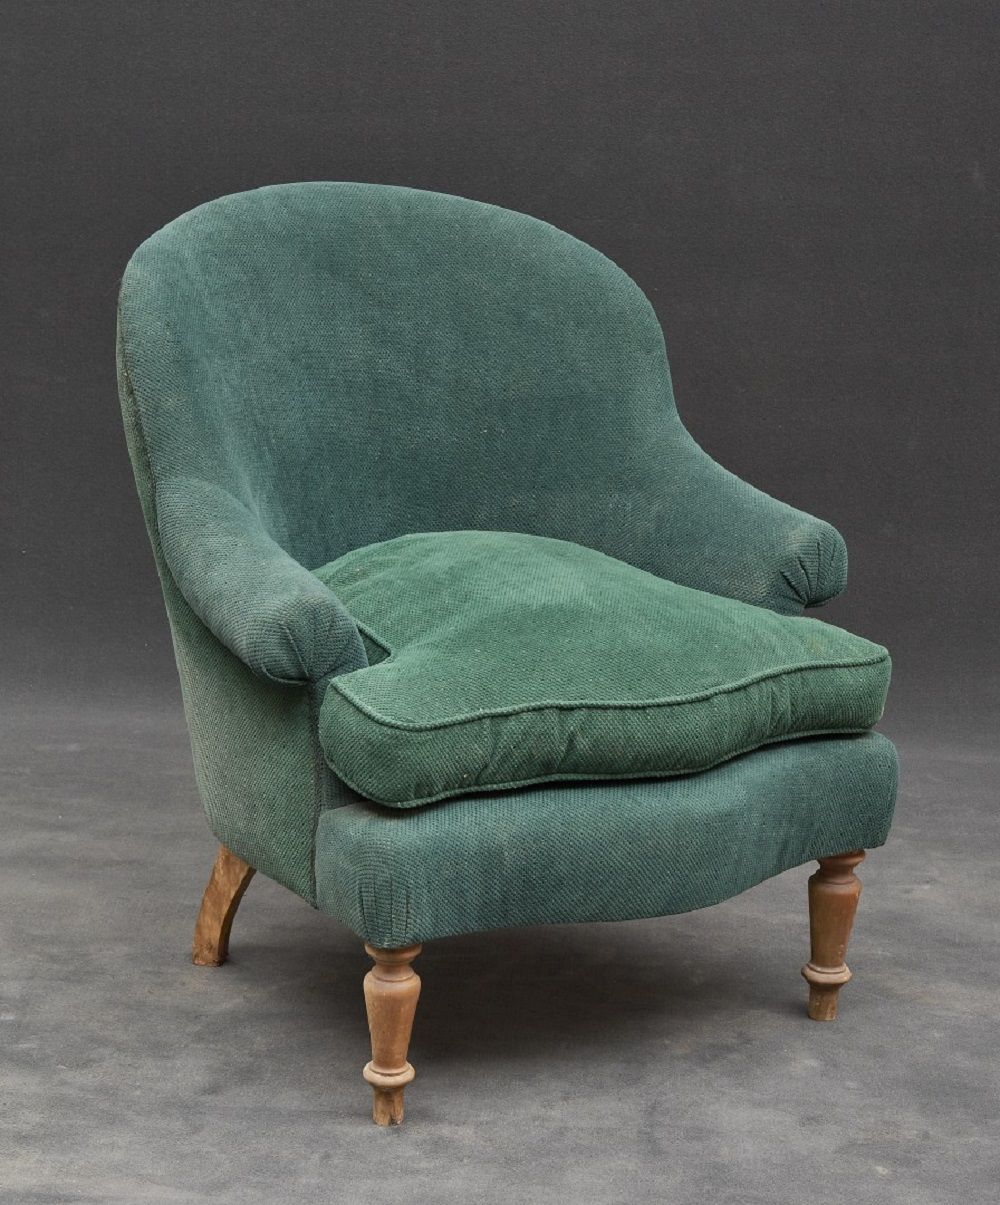 Null 一对19世纪的扶手椅 形状，用绿色天鹅绒装饰，有圆拱形的腿。


穿在天鹅绒上。86 x 77 x 80厘米